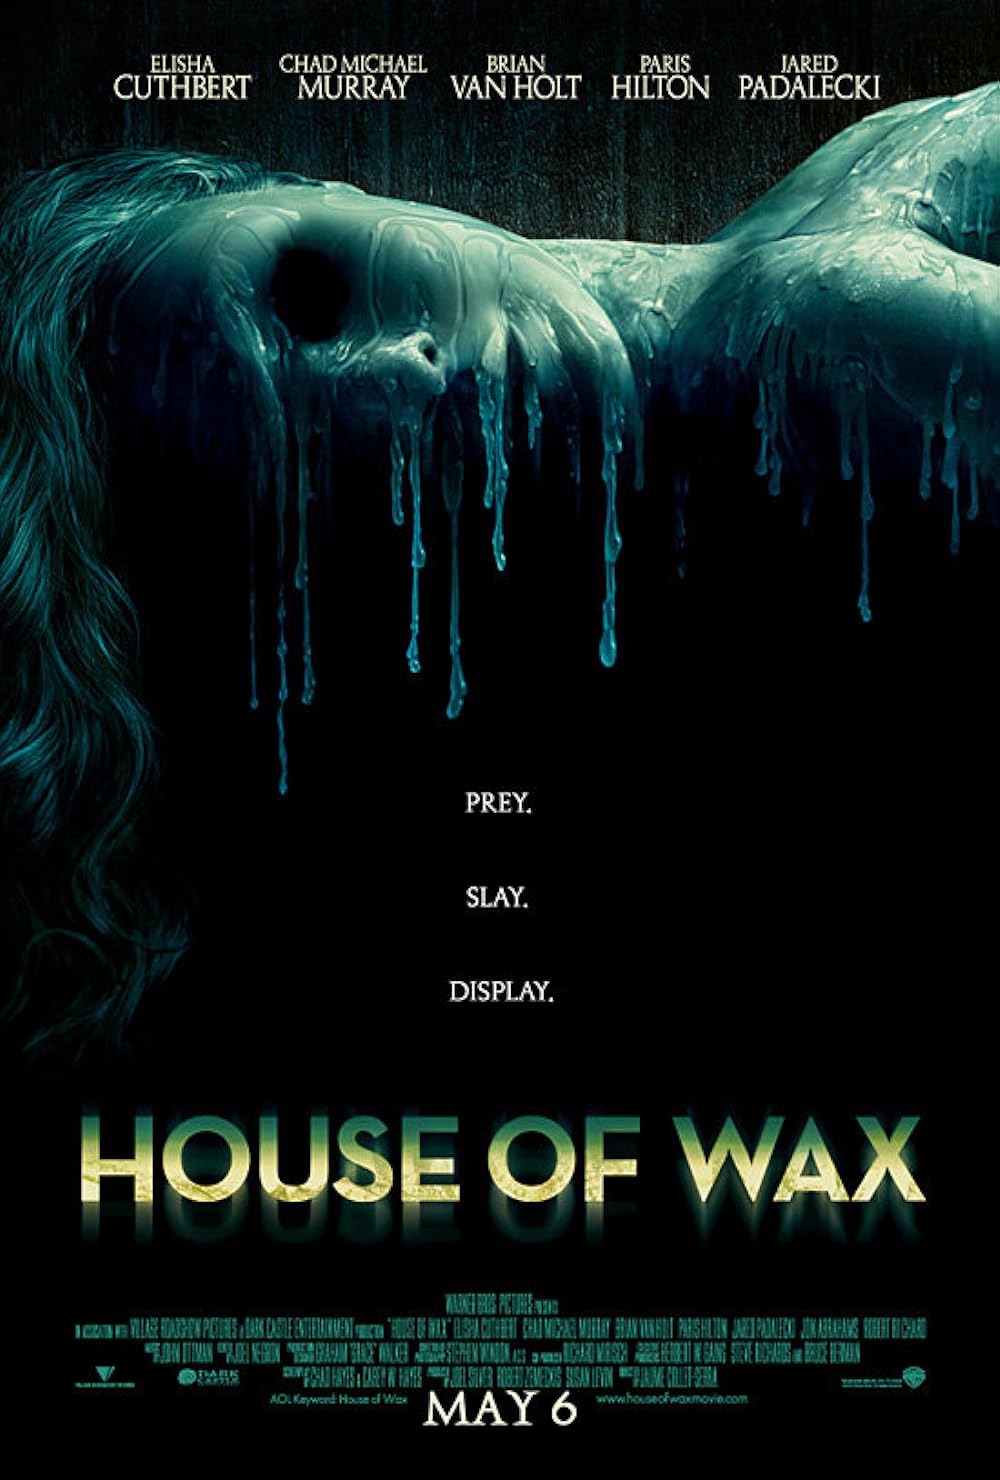 FULL MOVIE: House of Wax (2005)